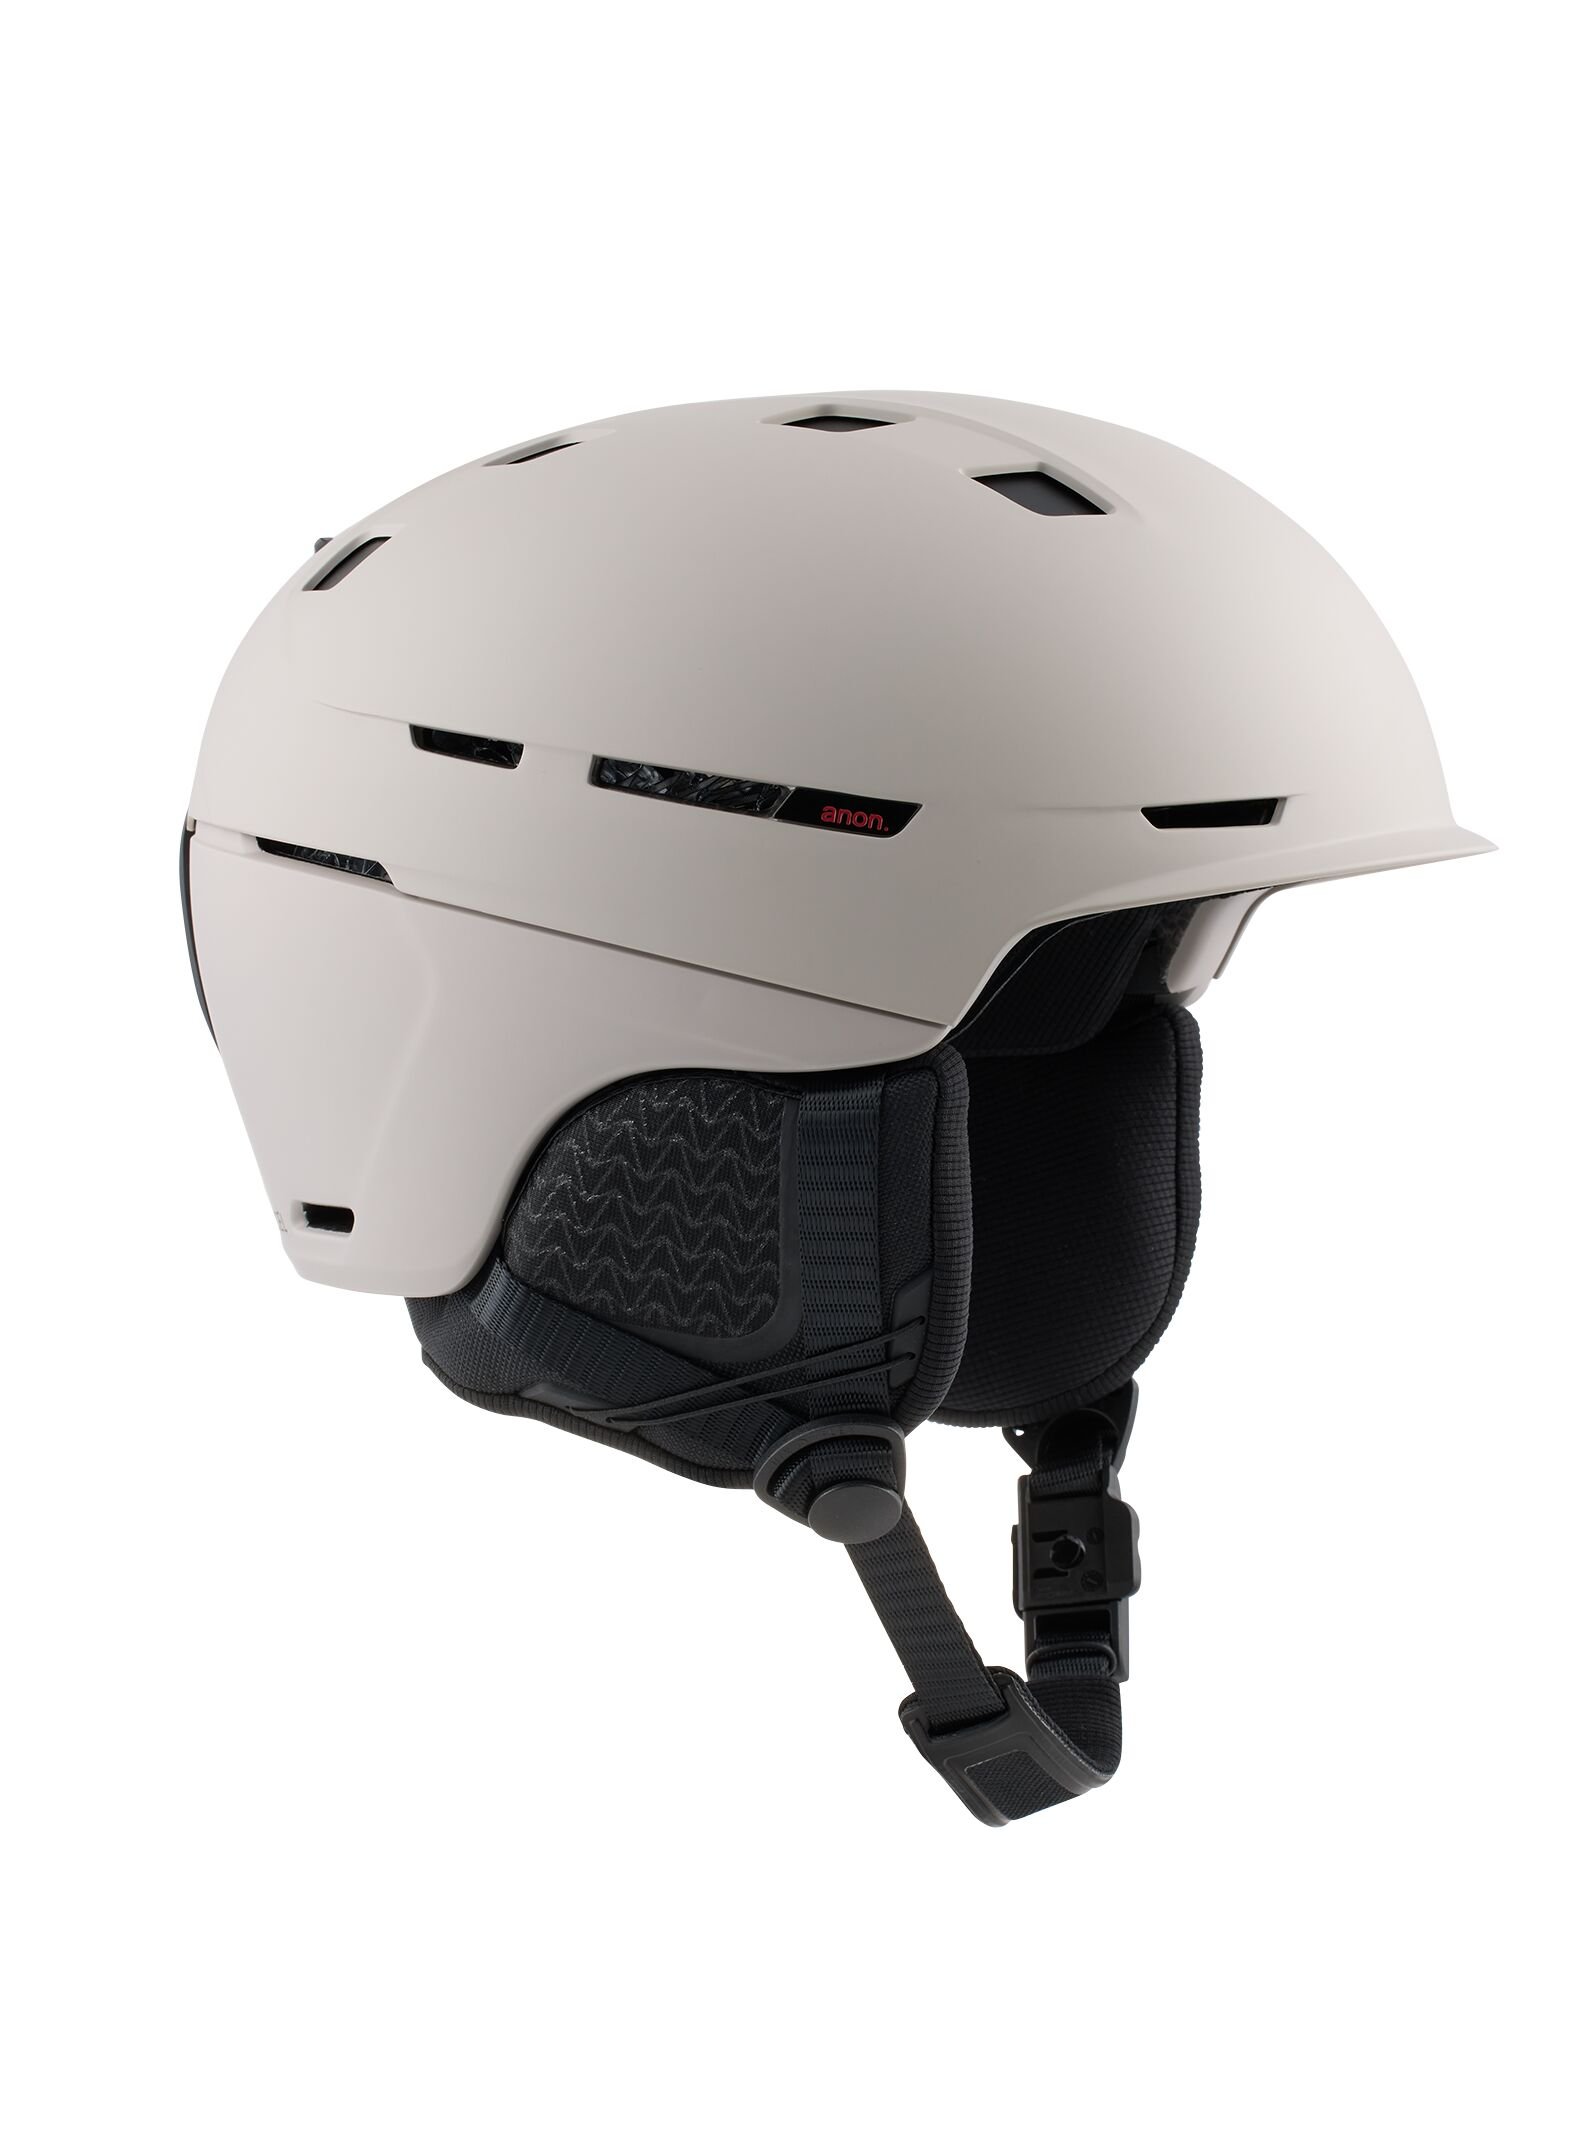 helmet Image